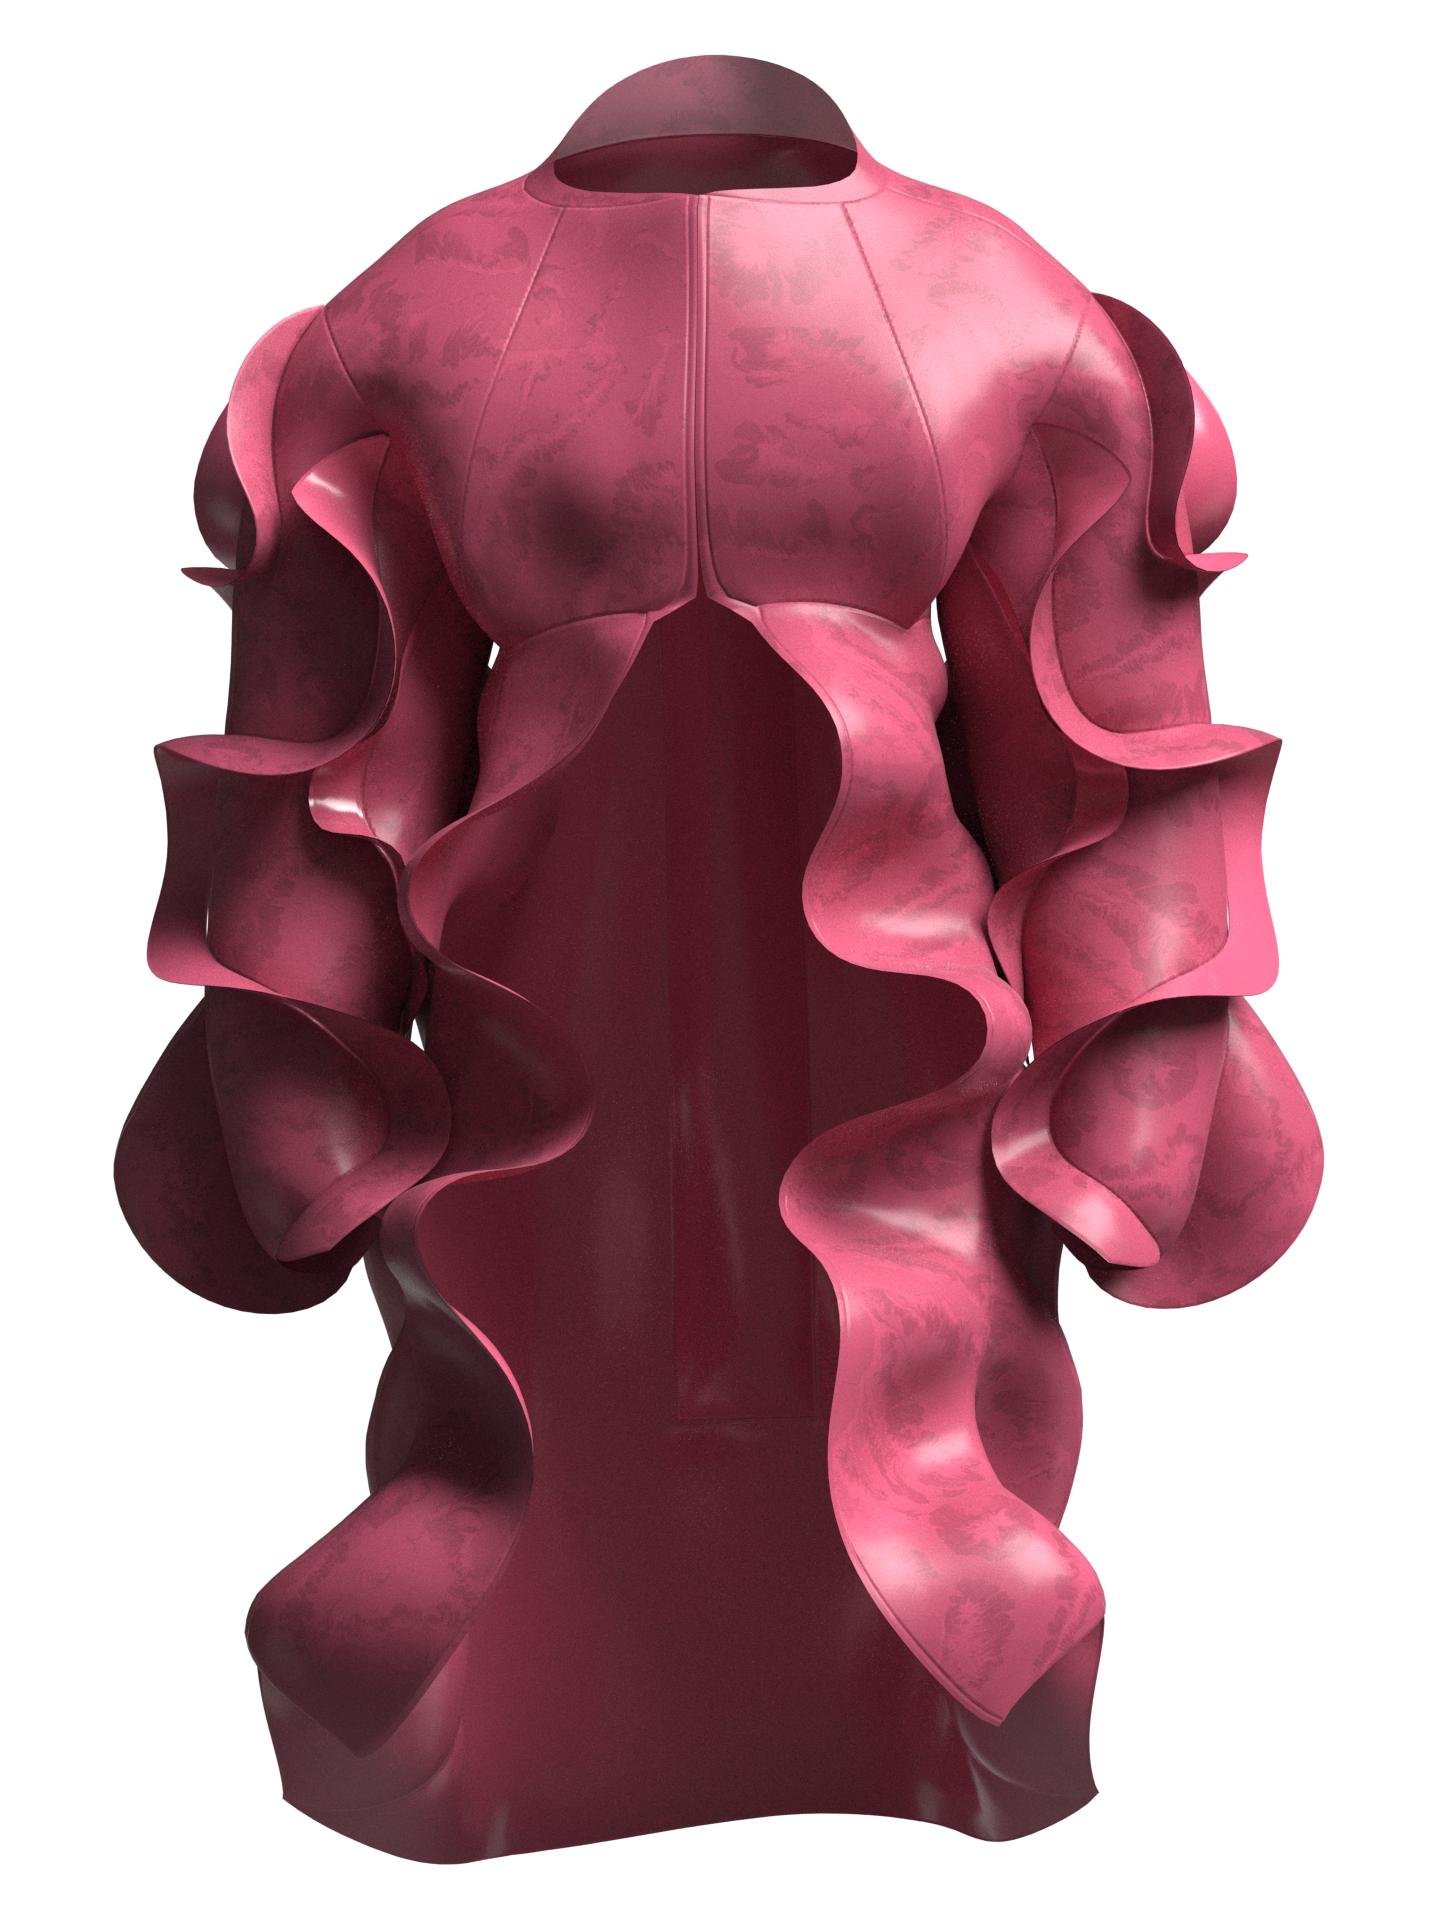 Coat aniconic pink by AHMED NABIYEV